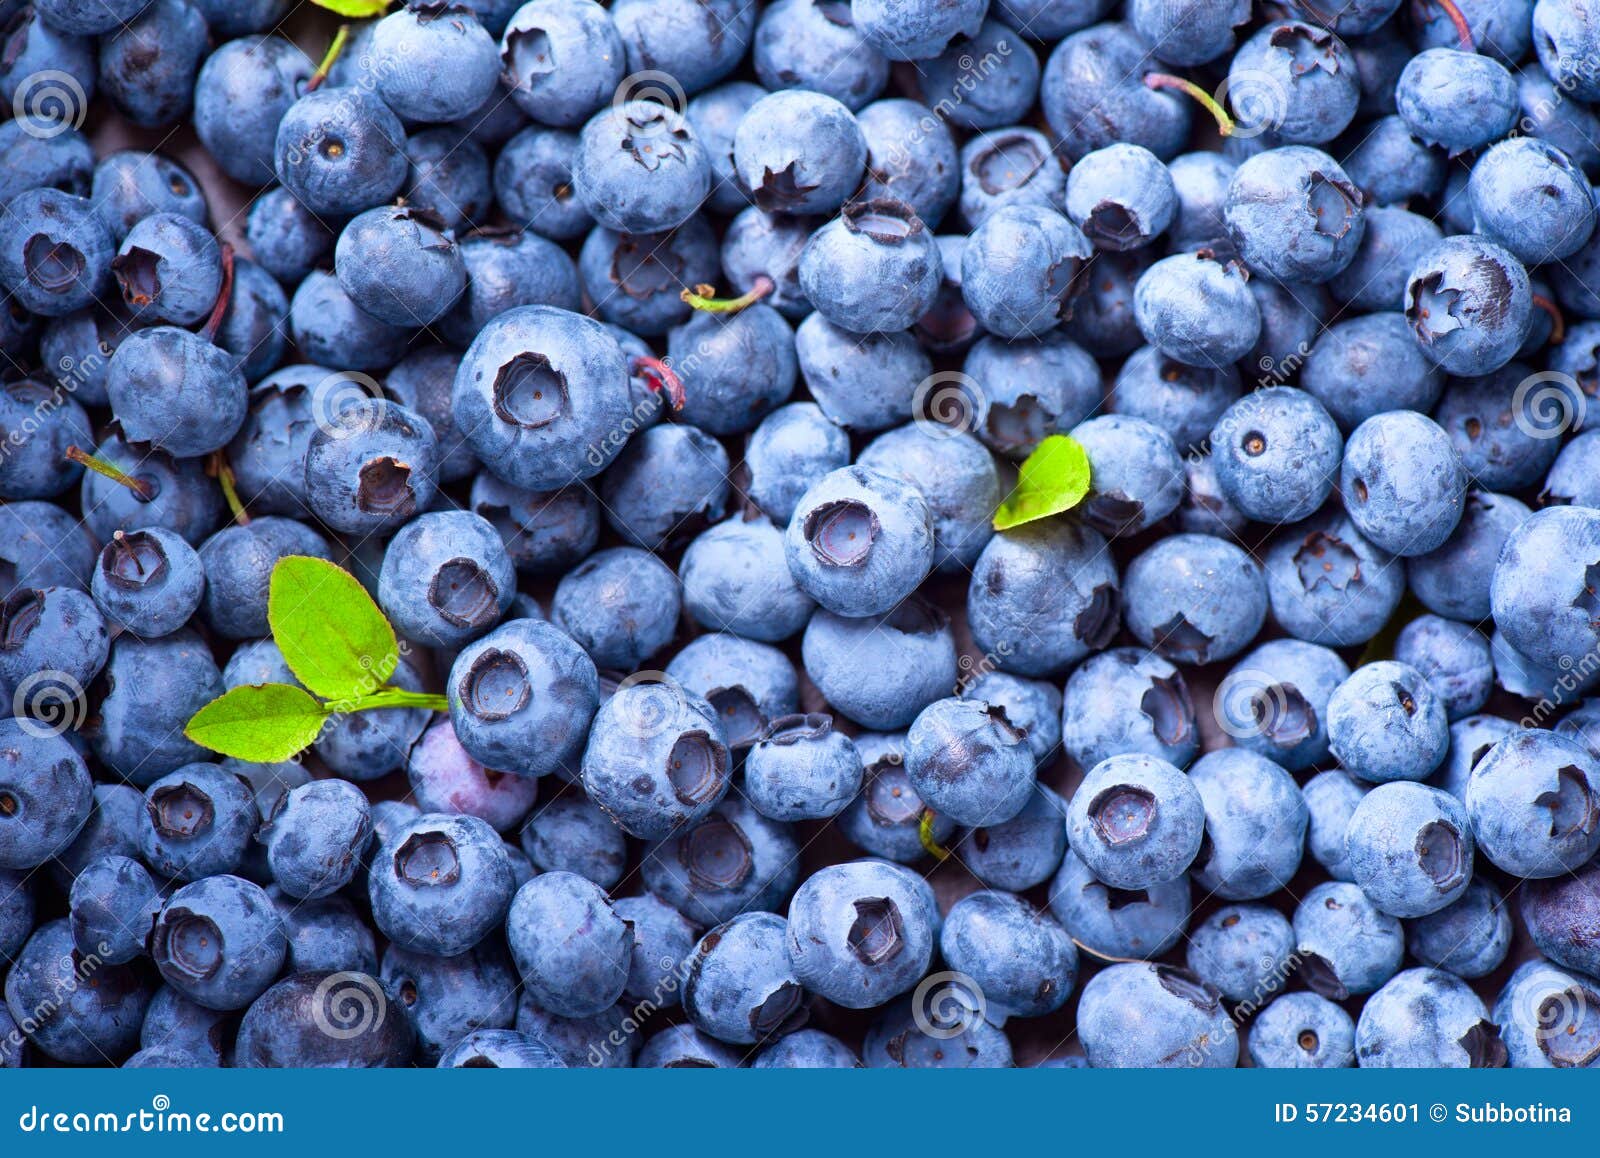 blueberry background. ripe blueberries closeup